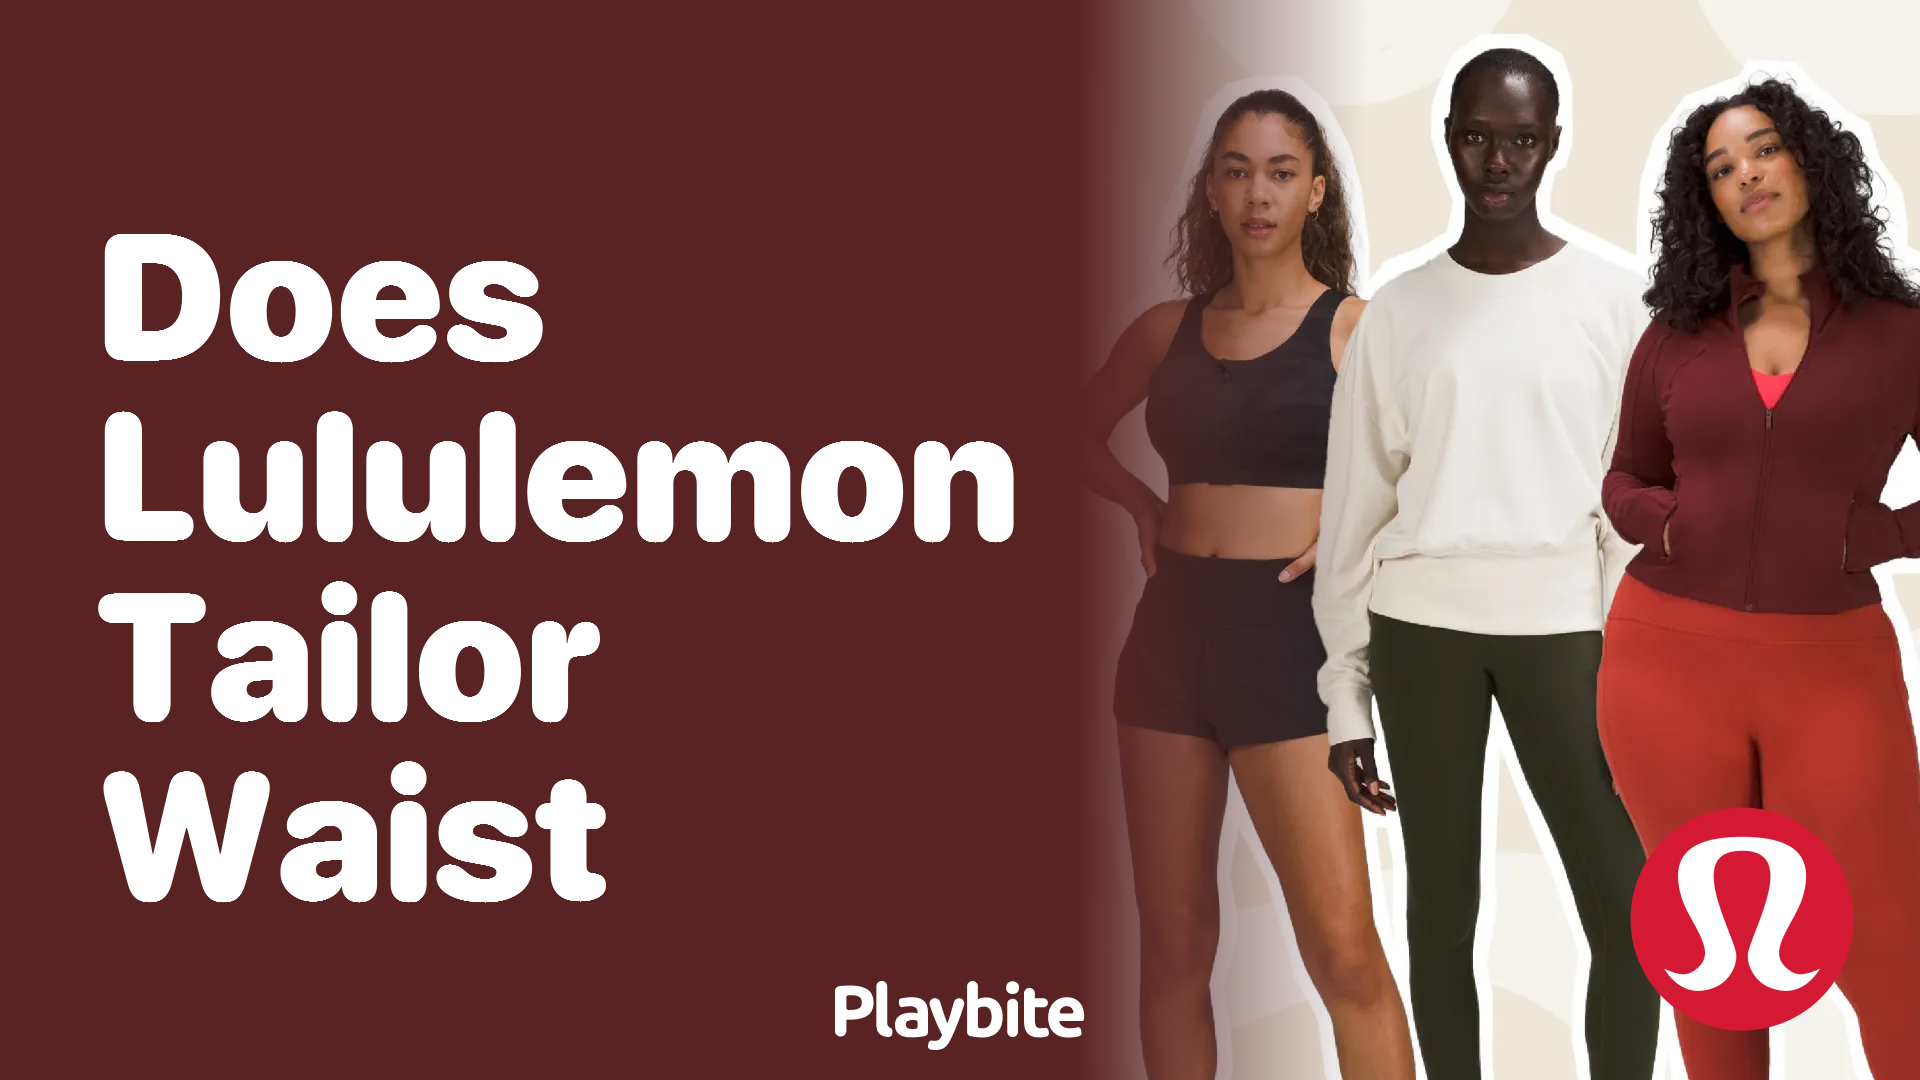 When Will Lululemon Restock Sonic Pink Shorts? - Playbite